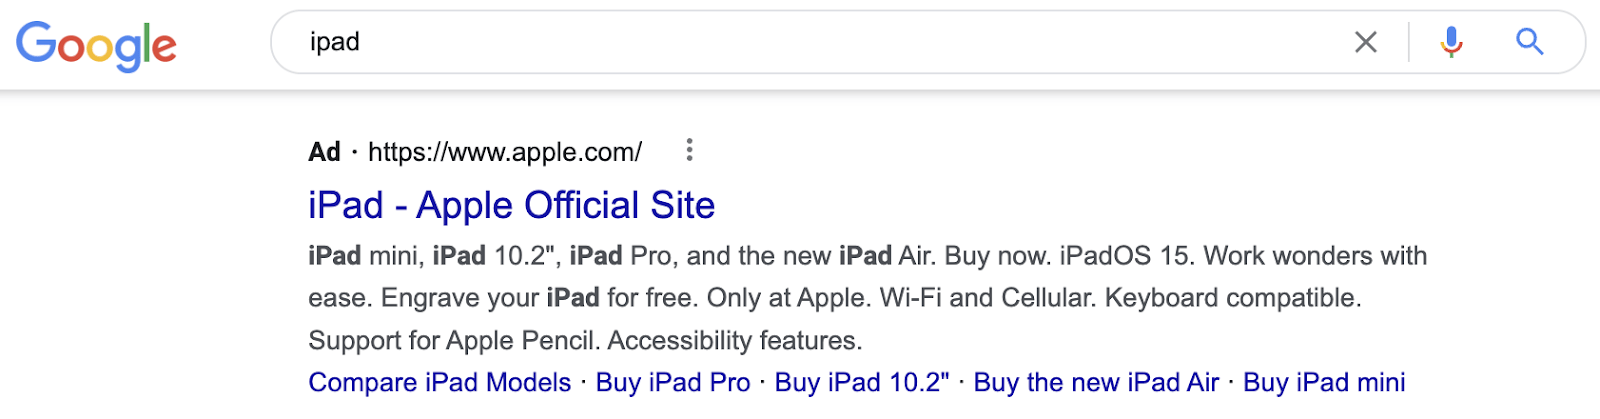 Example PPC ad in Google